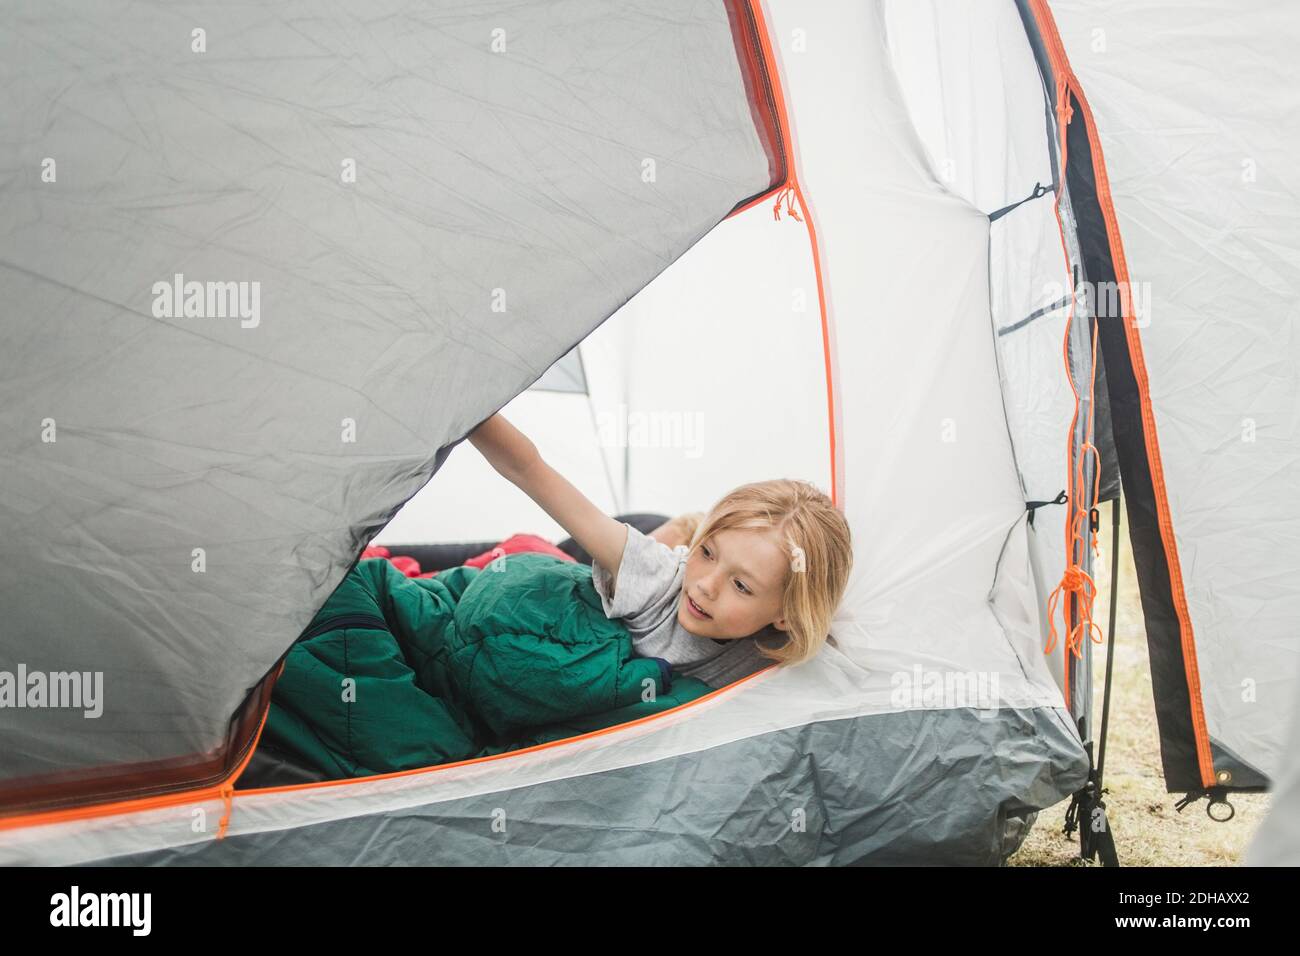 Girl in sleeping bag peeking through tent at camping site Stock Photo